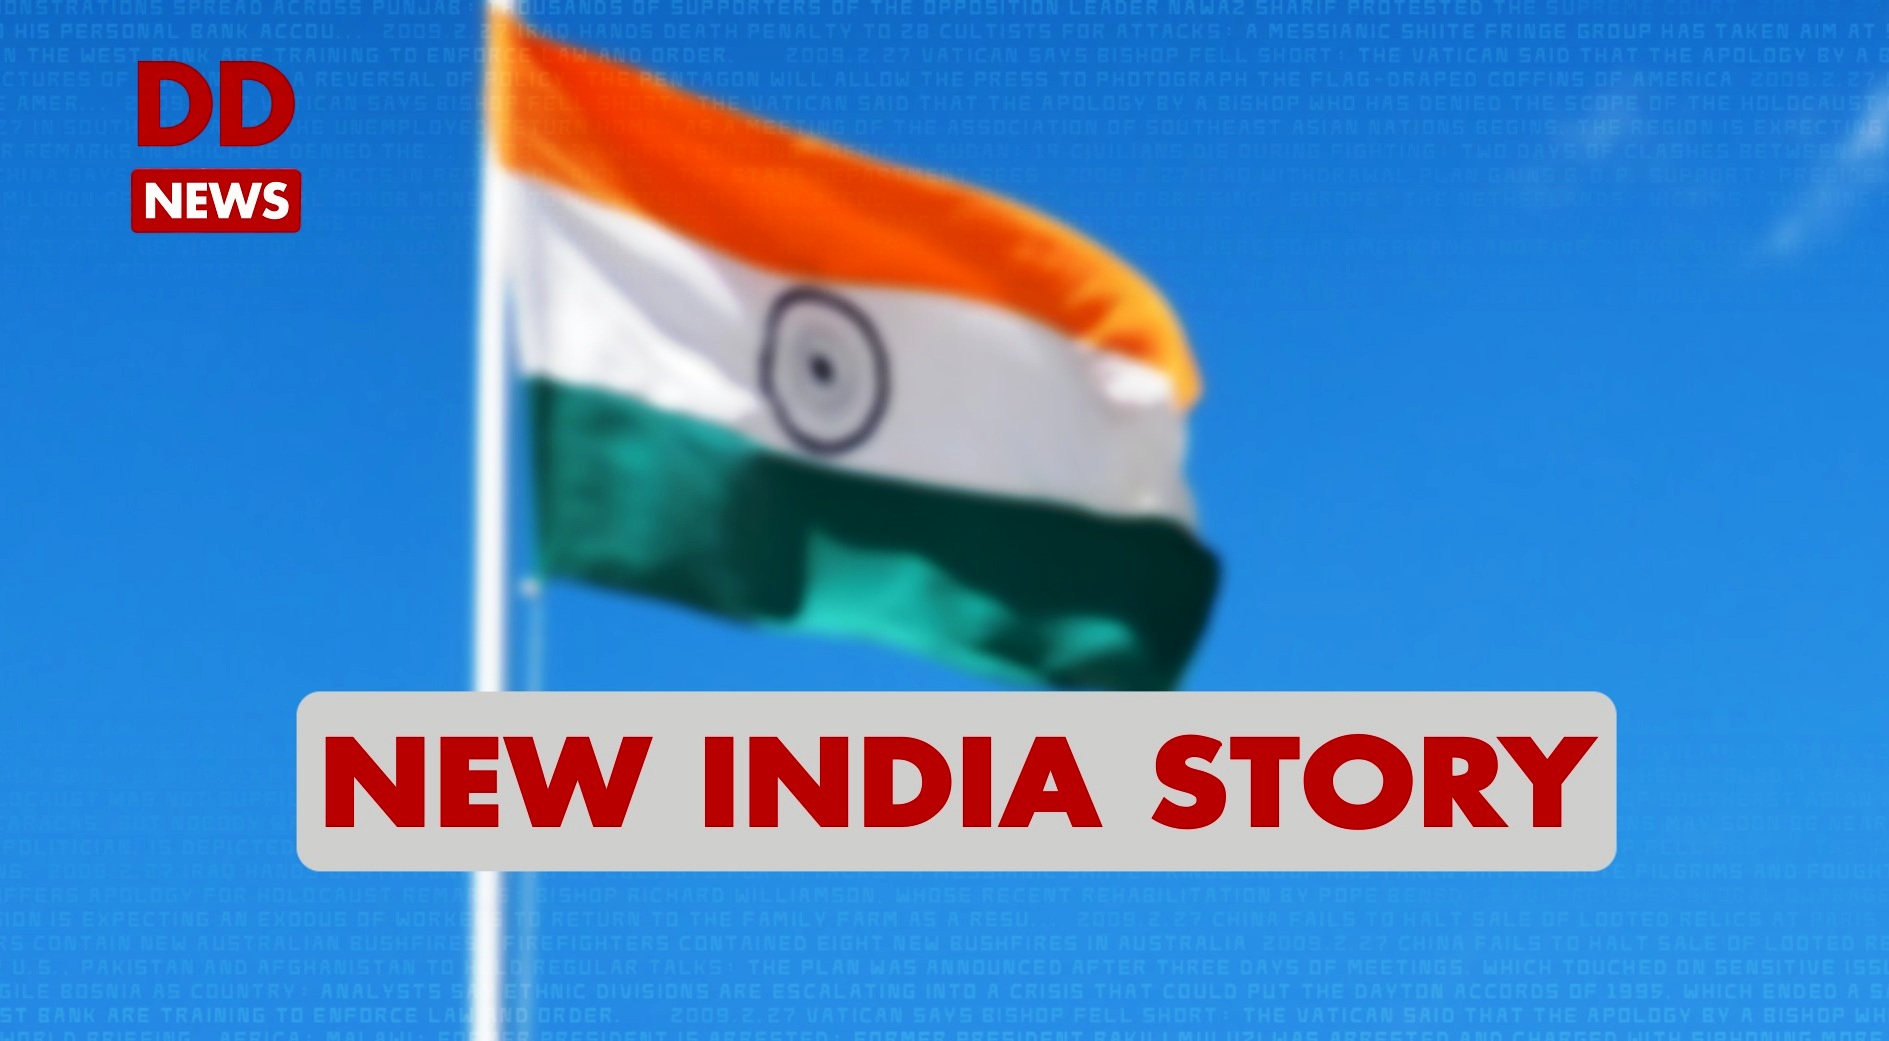 New India Story / Telangana / Mahabubabad / Pradhan Mantri Ujjwala Yojana